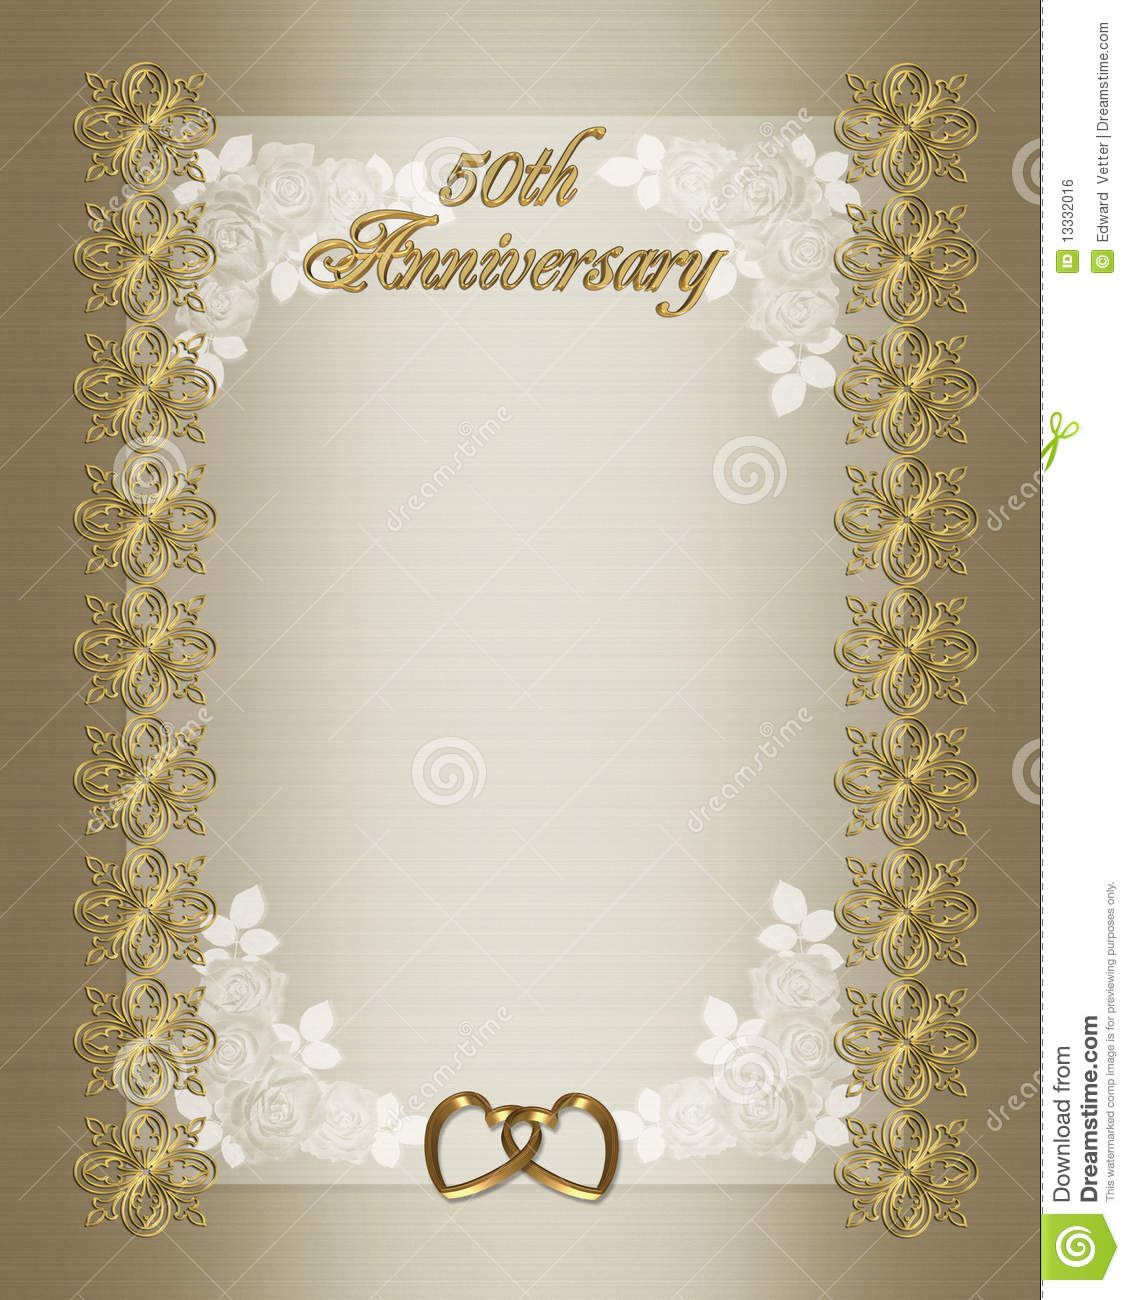 50th Wedding Anniversary Invitation Template Stock Illustration inside size 1130 X 1300